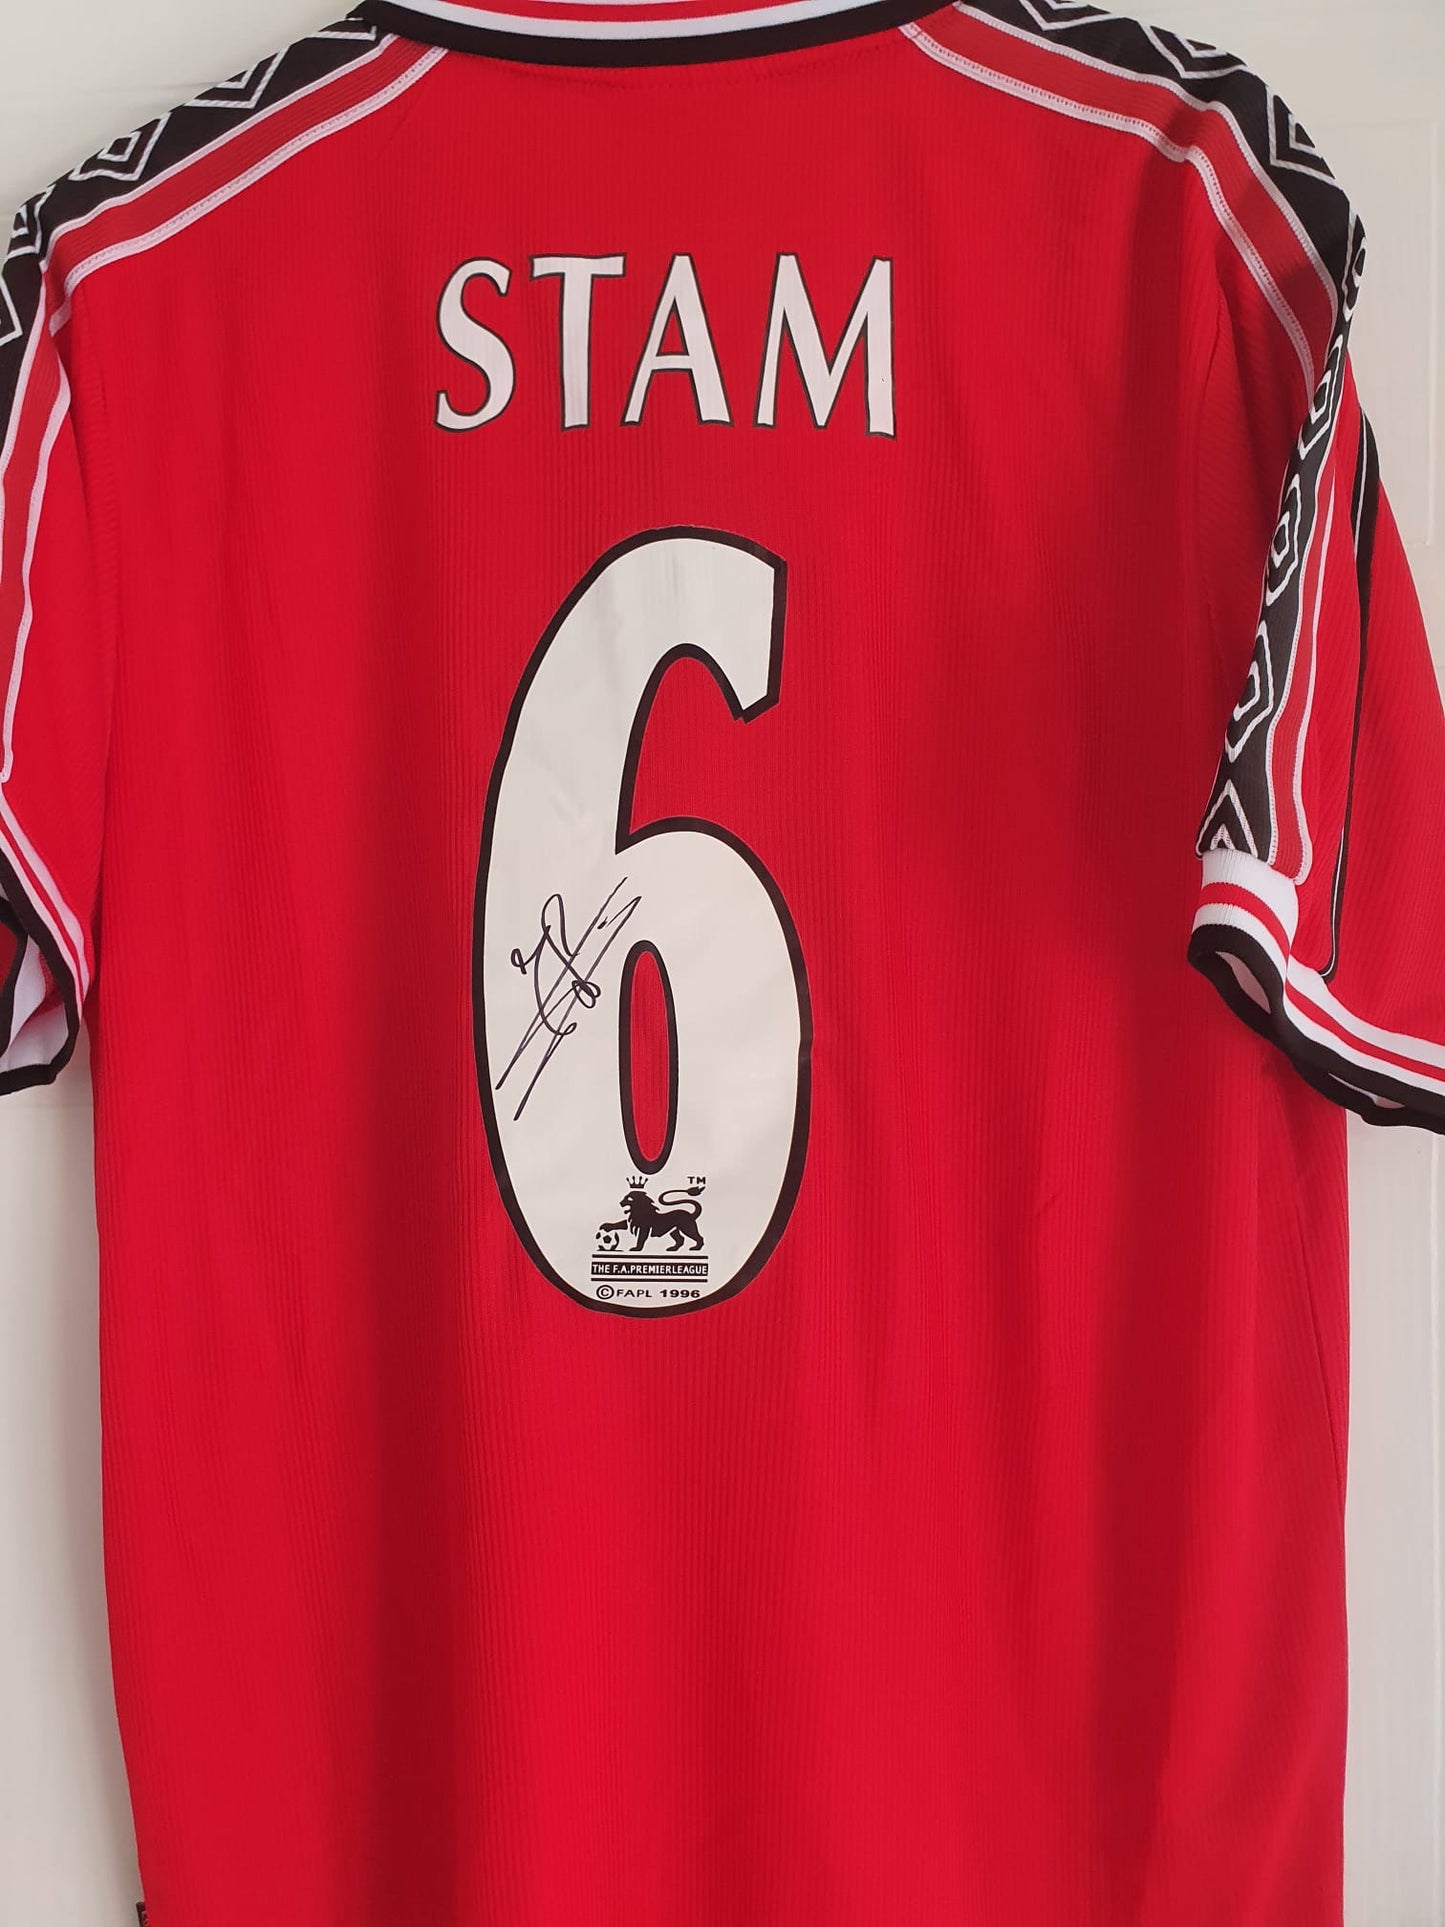 Jaap Stam Signed 1999 Manchester United Shirt